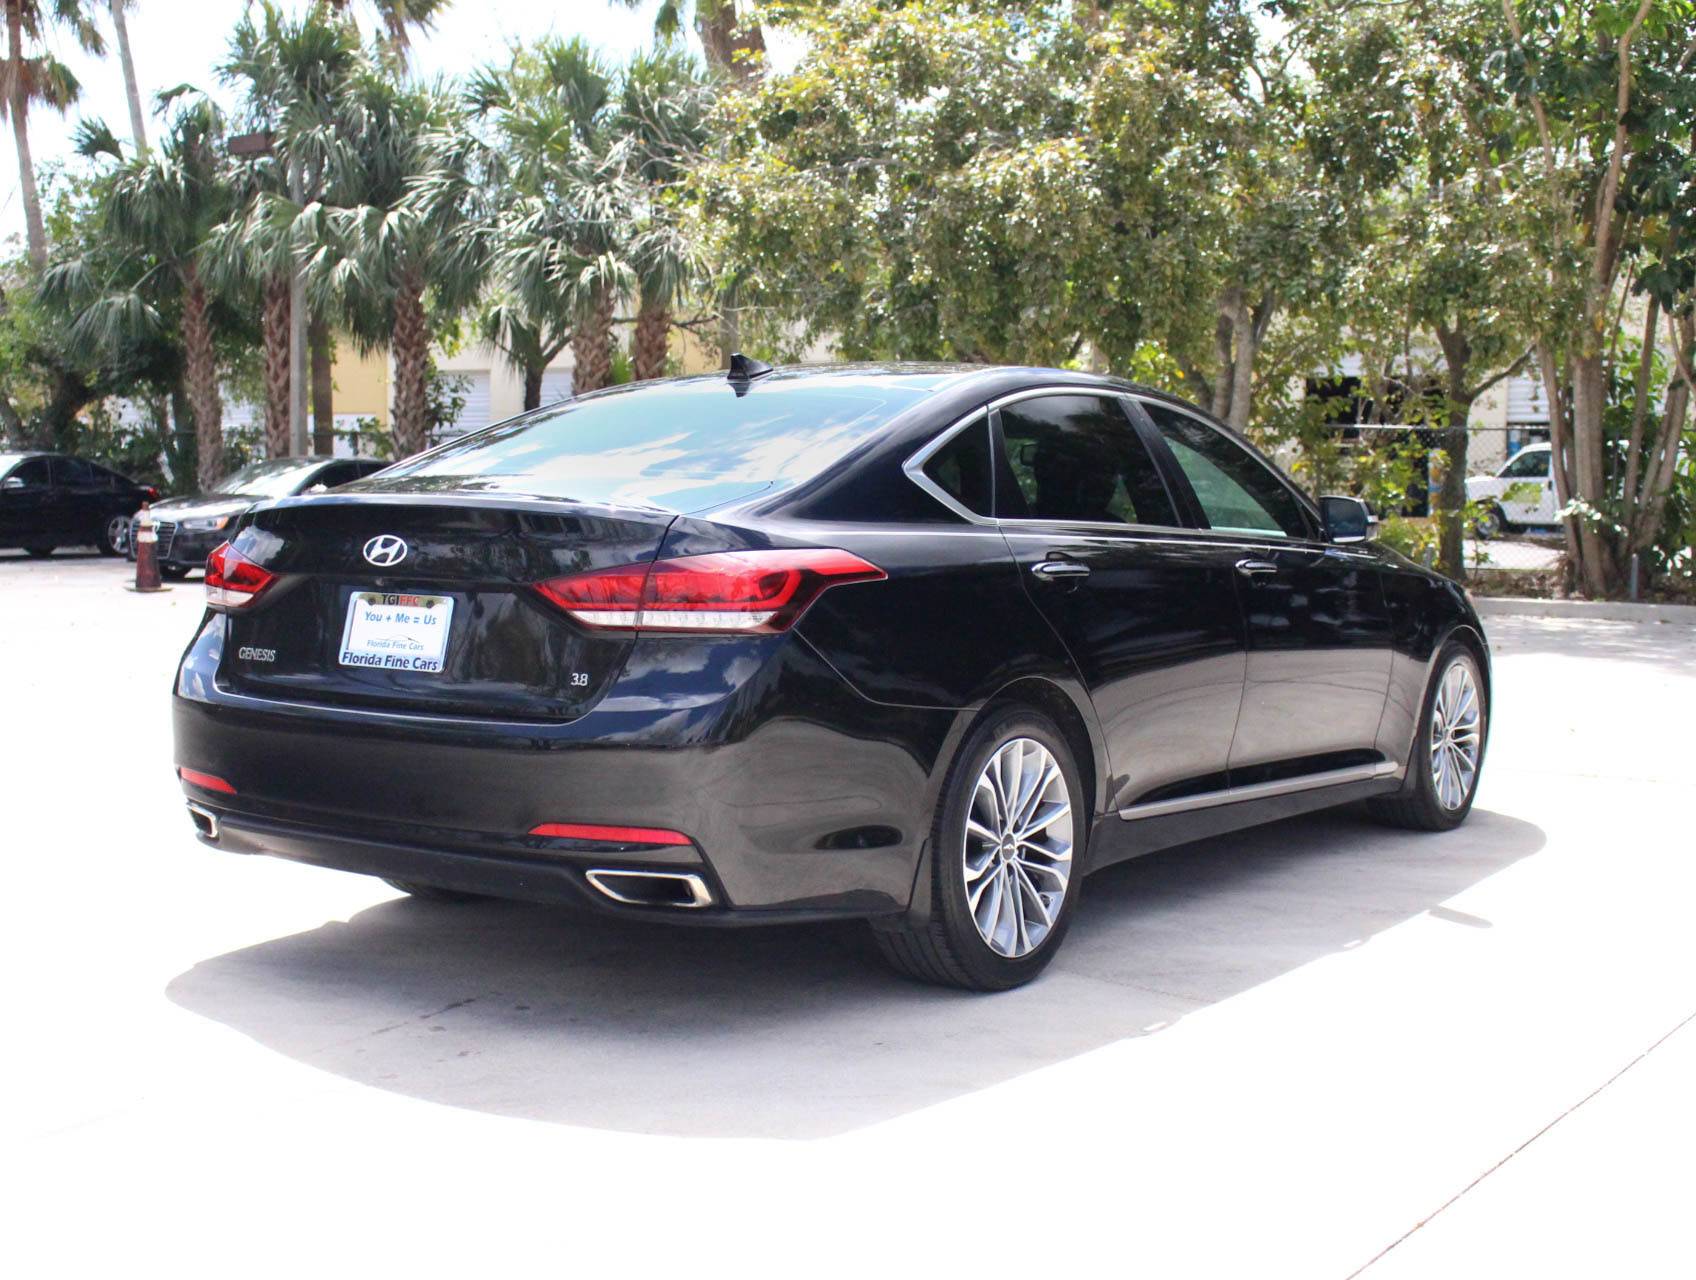 Florida Fine Cars - Used HYUNDAI GENESIS 2015 MARGATE 3.8l